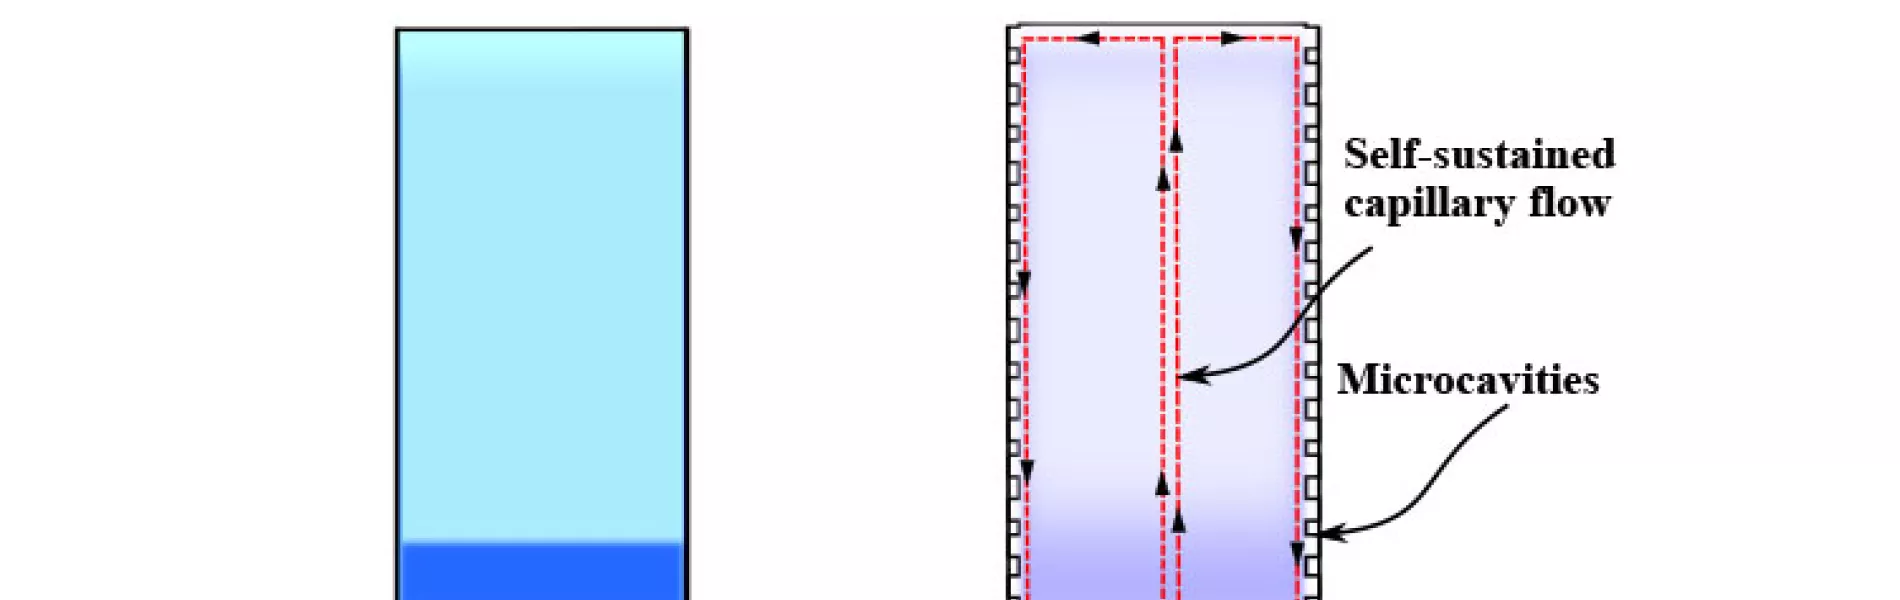 Figure 1: Illustration of sedimentation control in enclosed geometries using air-fi lled hydrophobic microcavities.